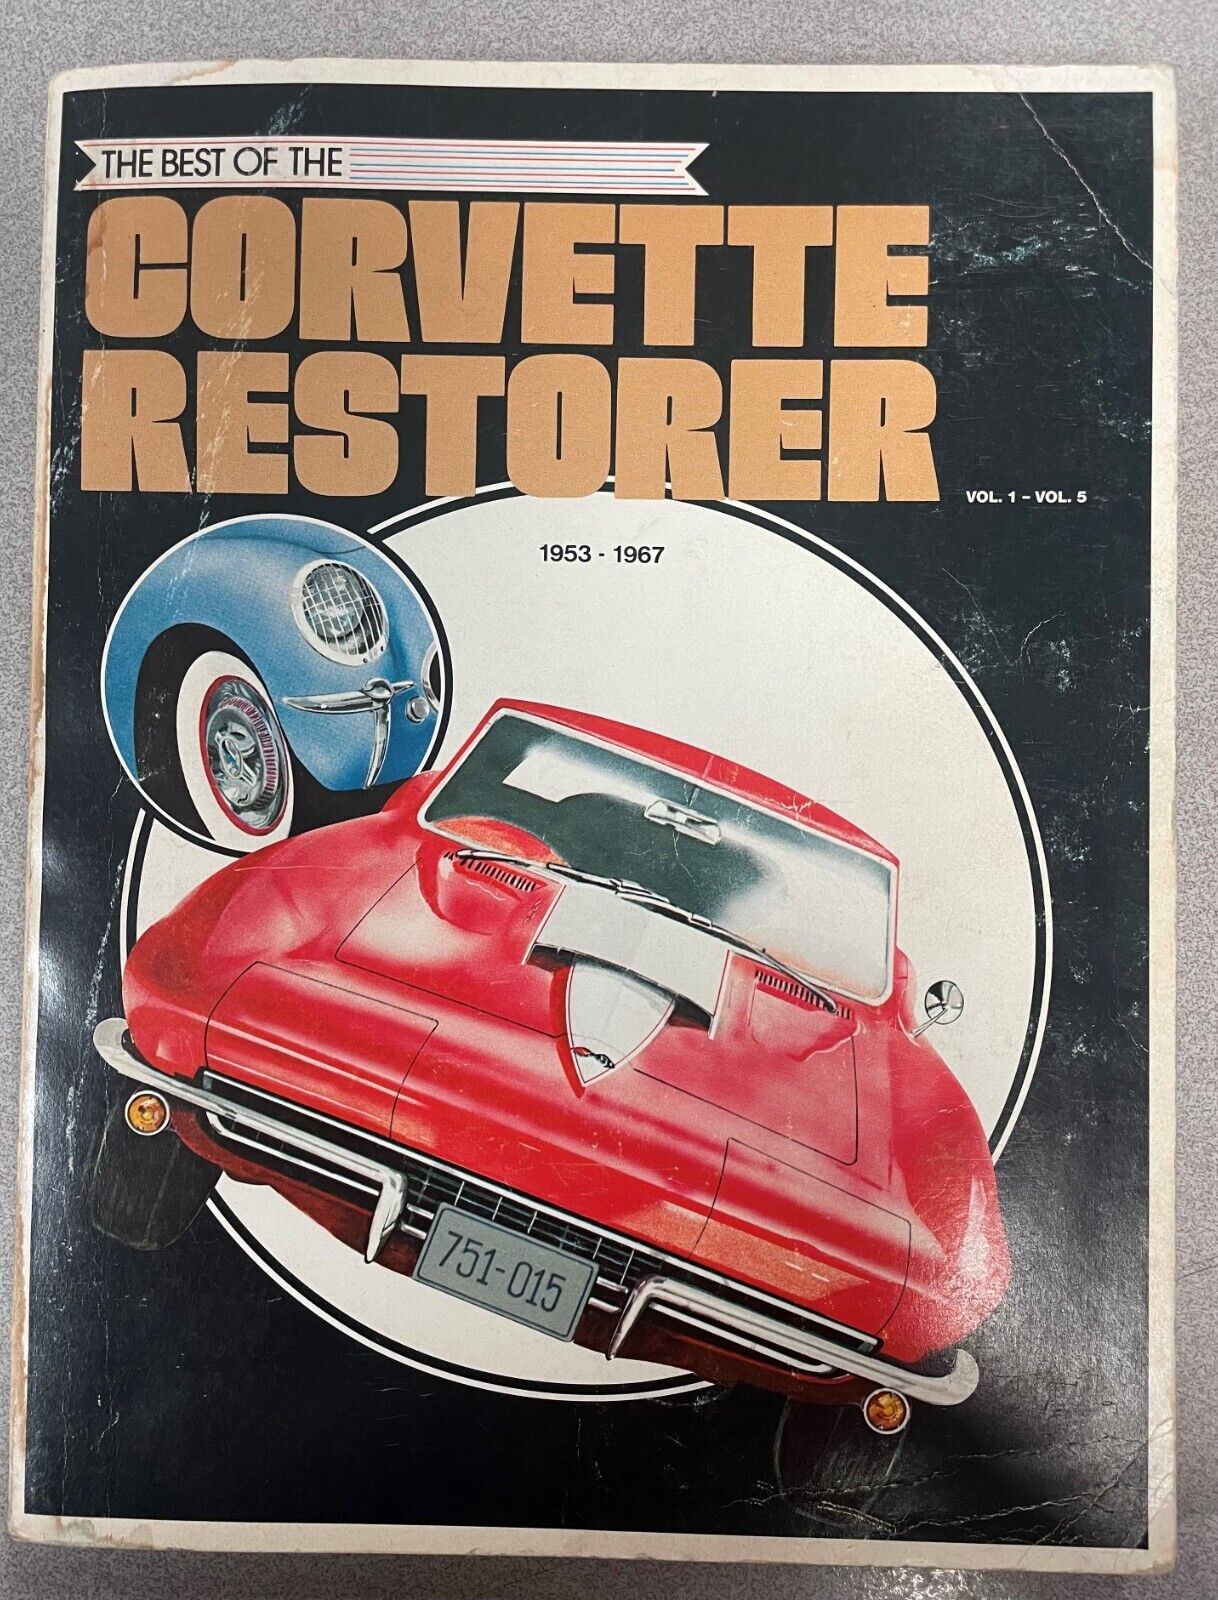 1953-1967 The Best of the Corvette Restorer Vol 1 - Vol 5